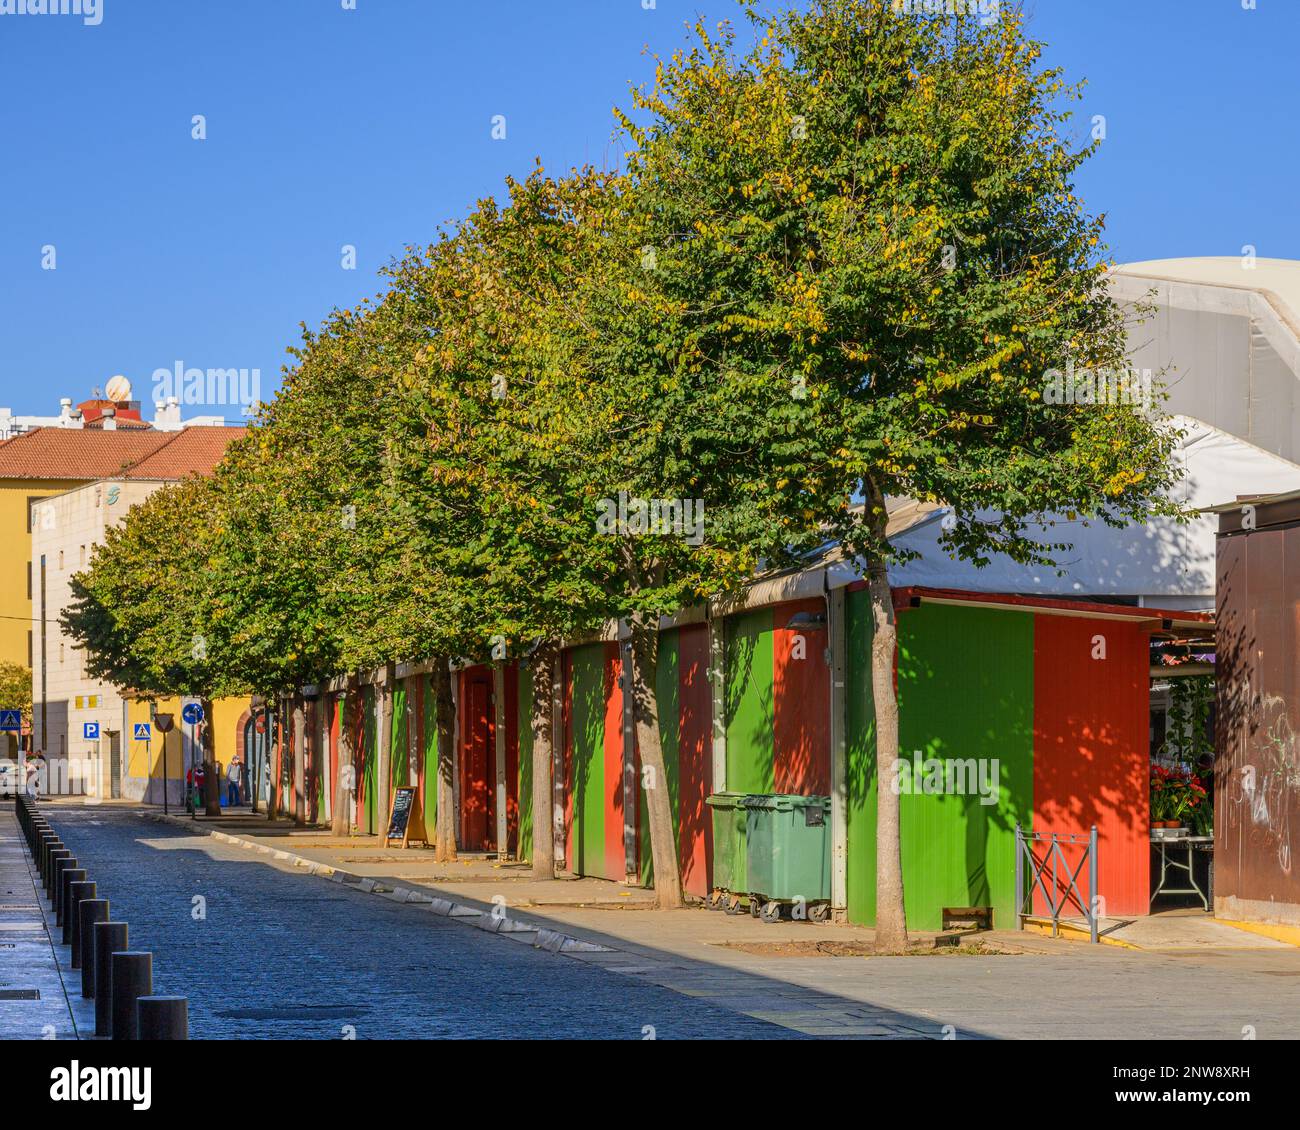 A line of neatly trimmed trees border the red and green-walled market stalls in Plaza de El Cristo, San Cristobal de la Laguna. Stock Photo